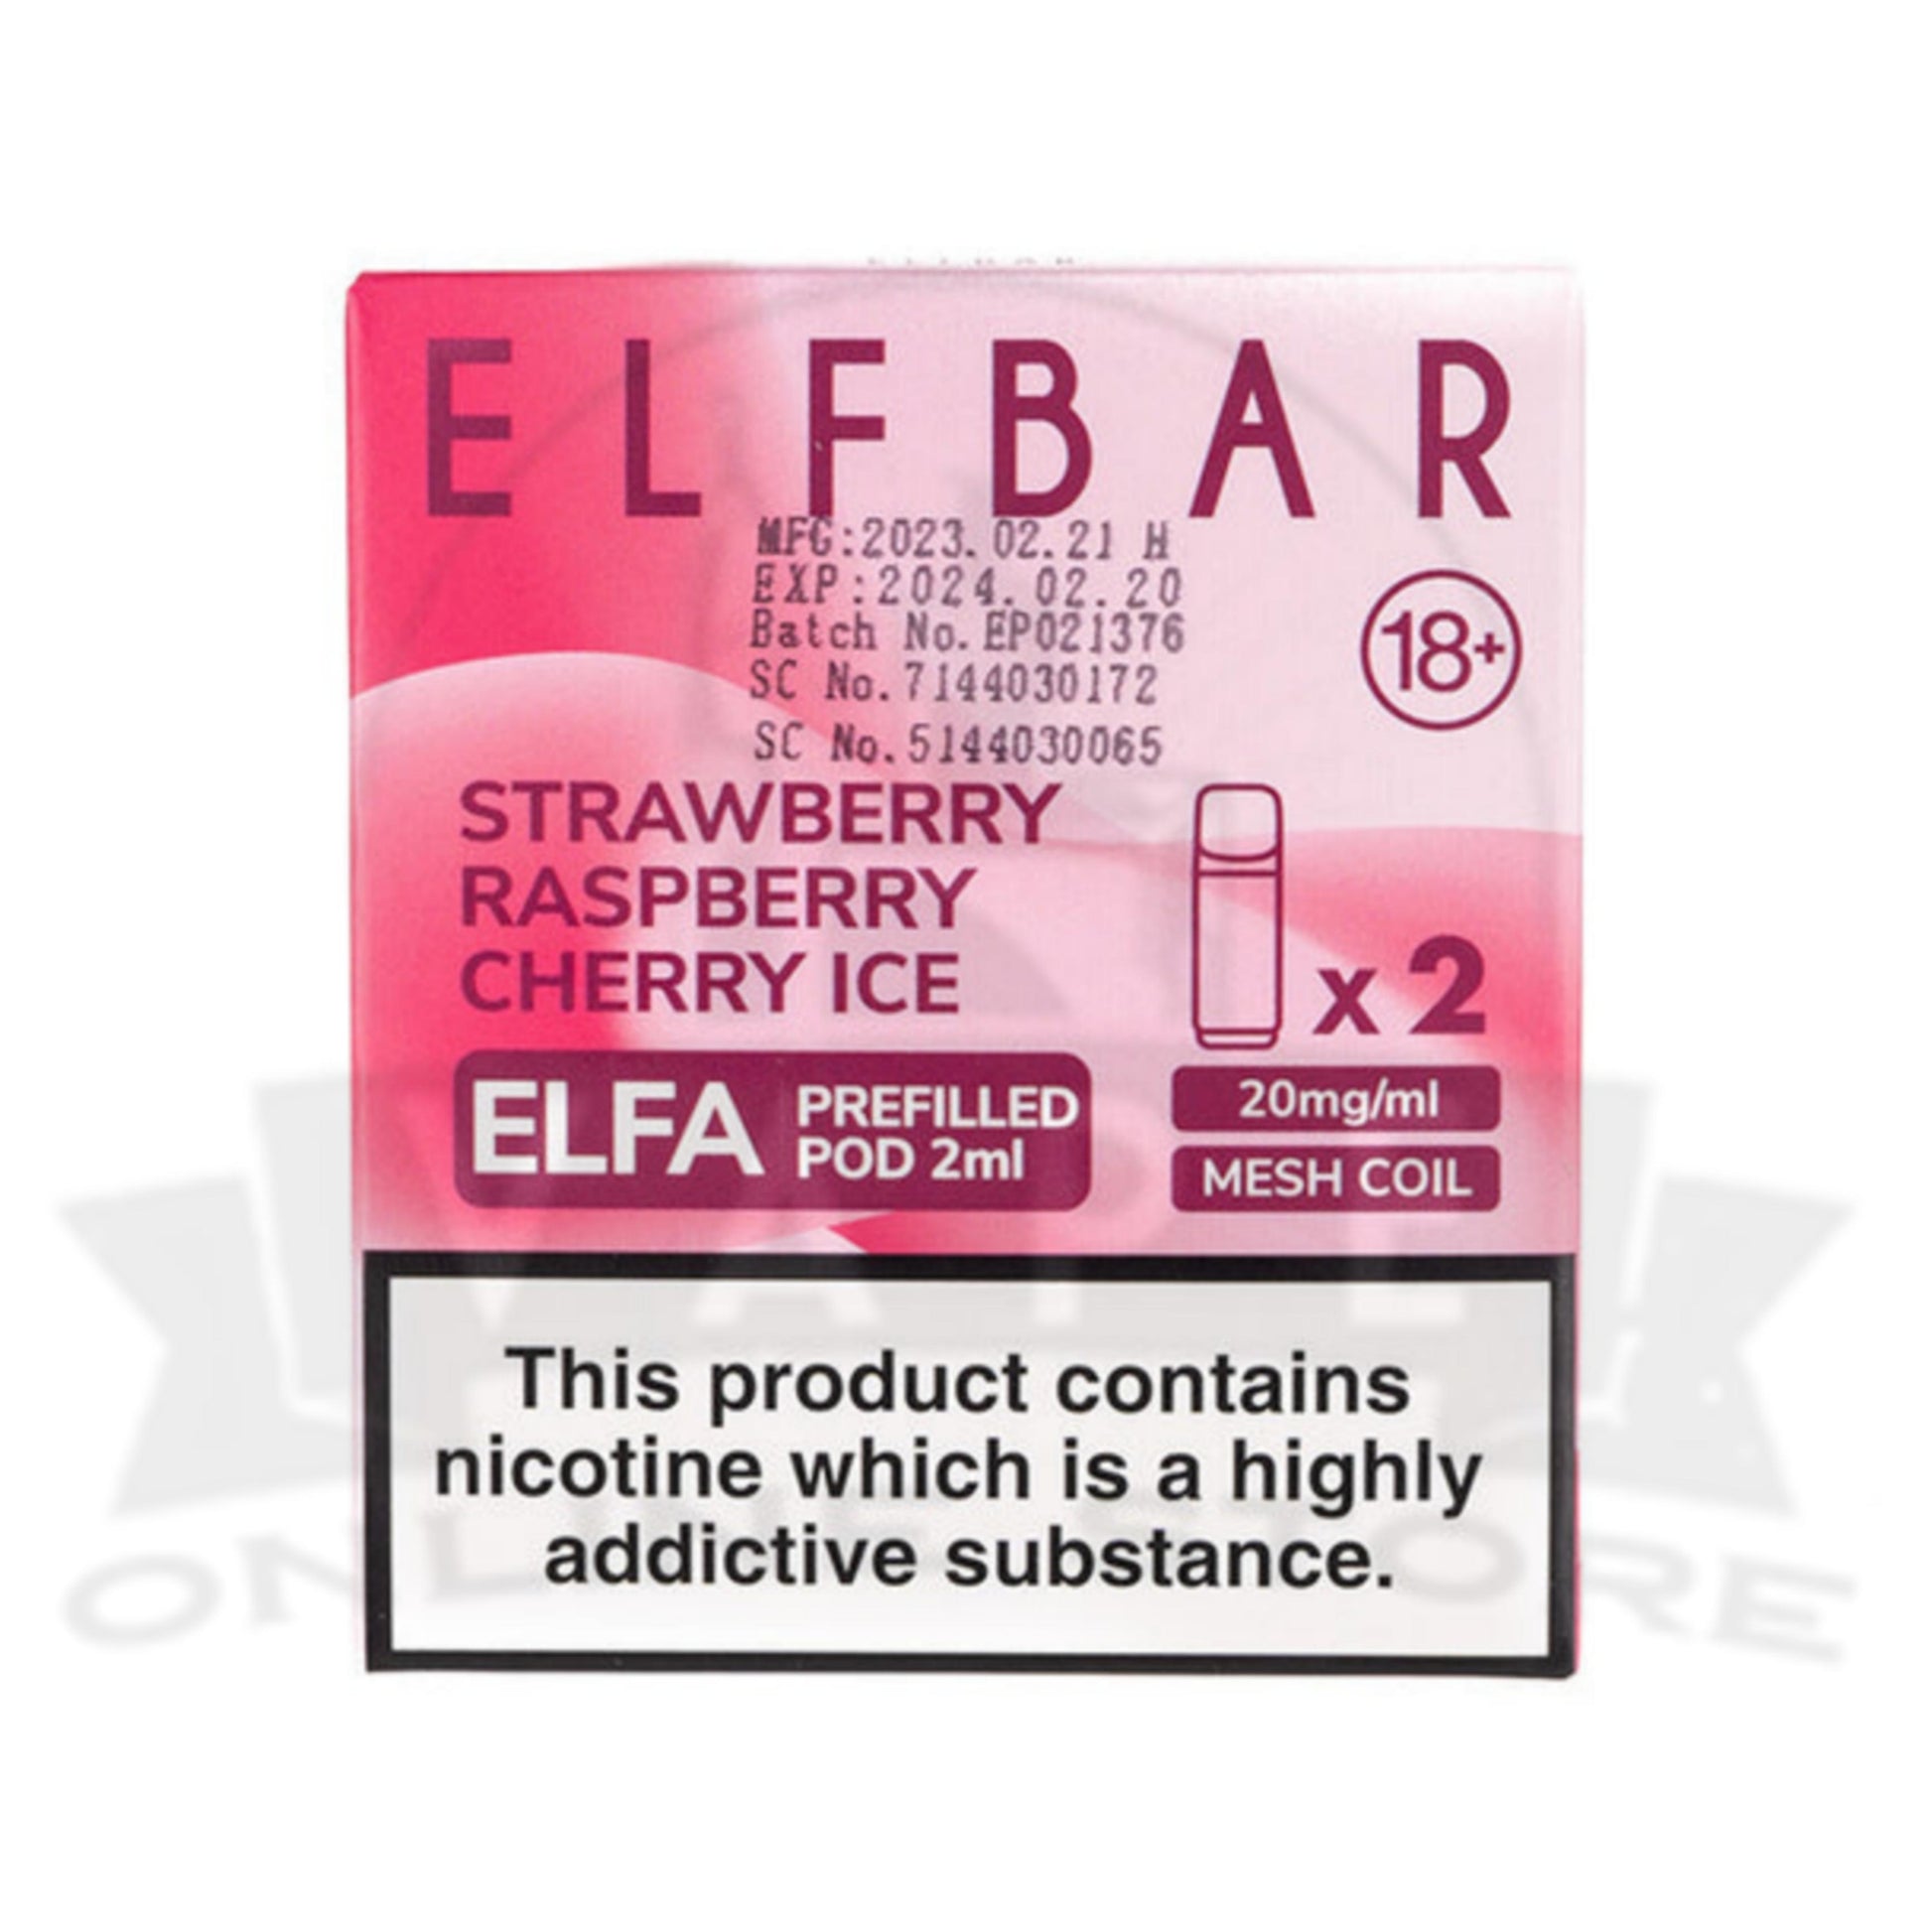 Strawberry Raspberry Cherry Ice Elfa Refillable Pods By Elf Bar